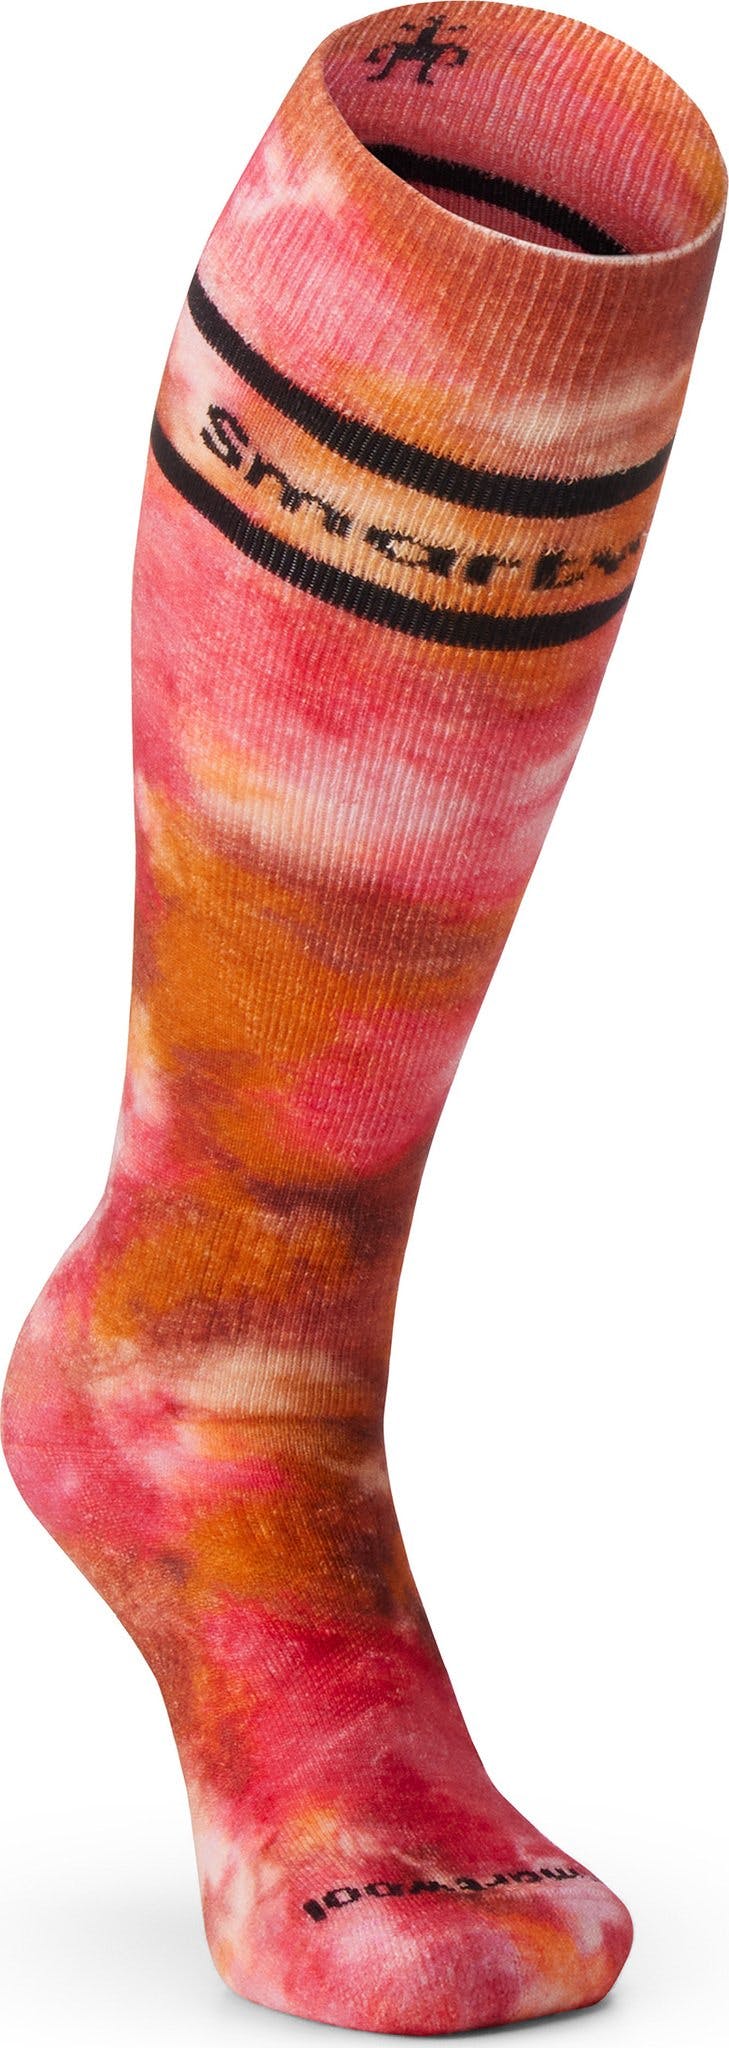 Product gallery image number 2 for product Ski Full Cushion Tie Dye Print OTC Socks - Women's